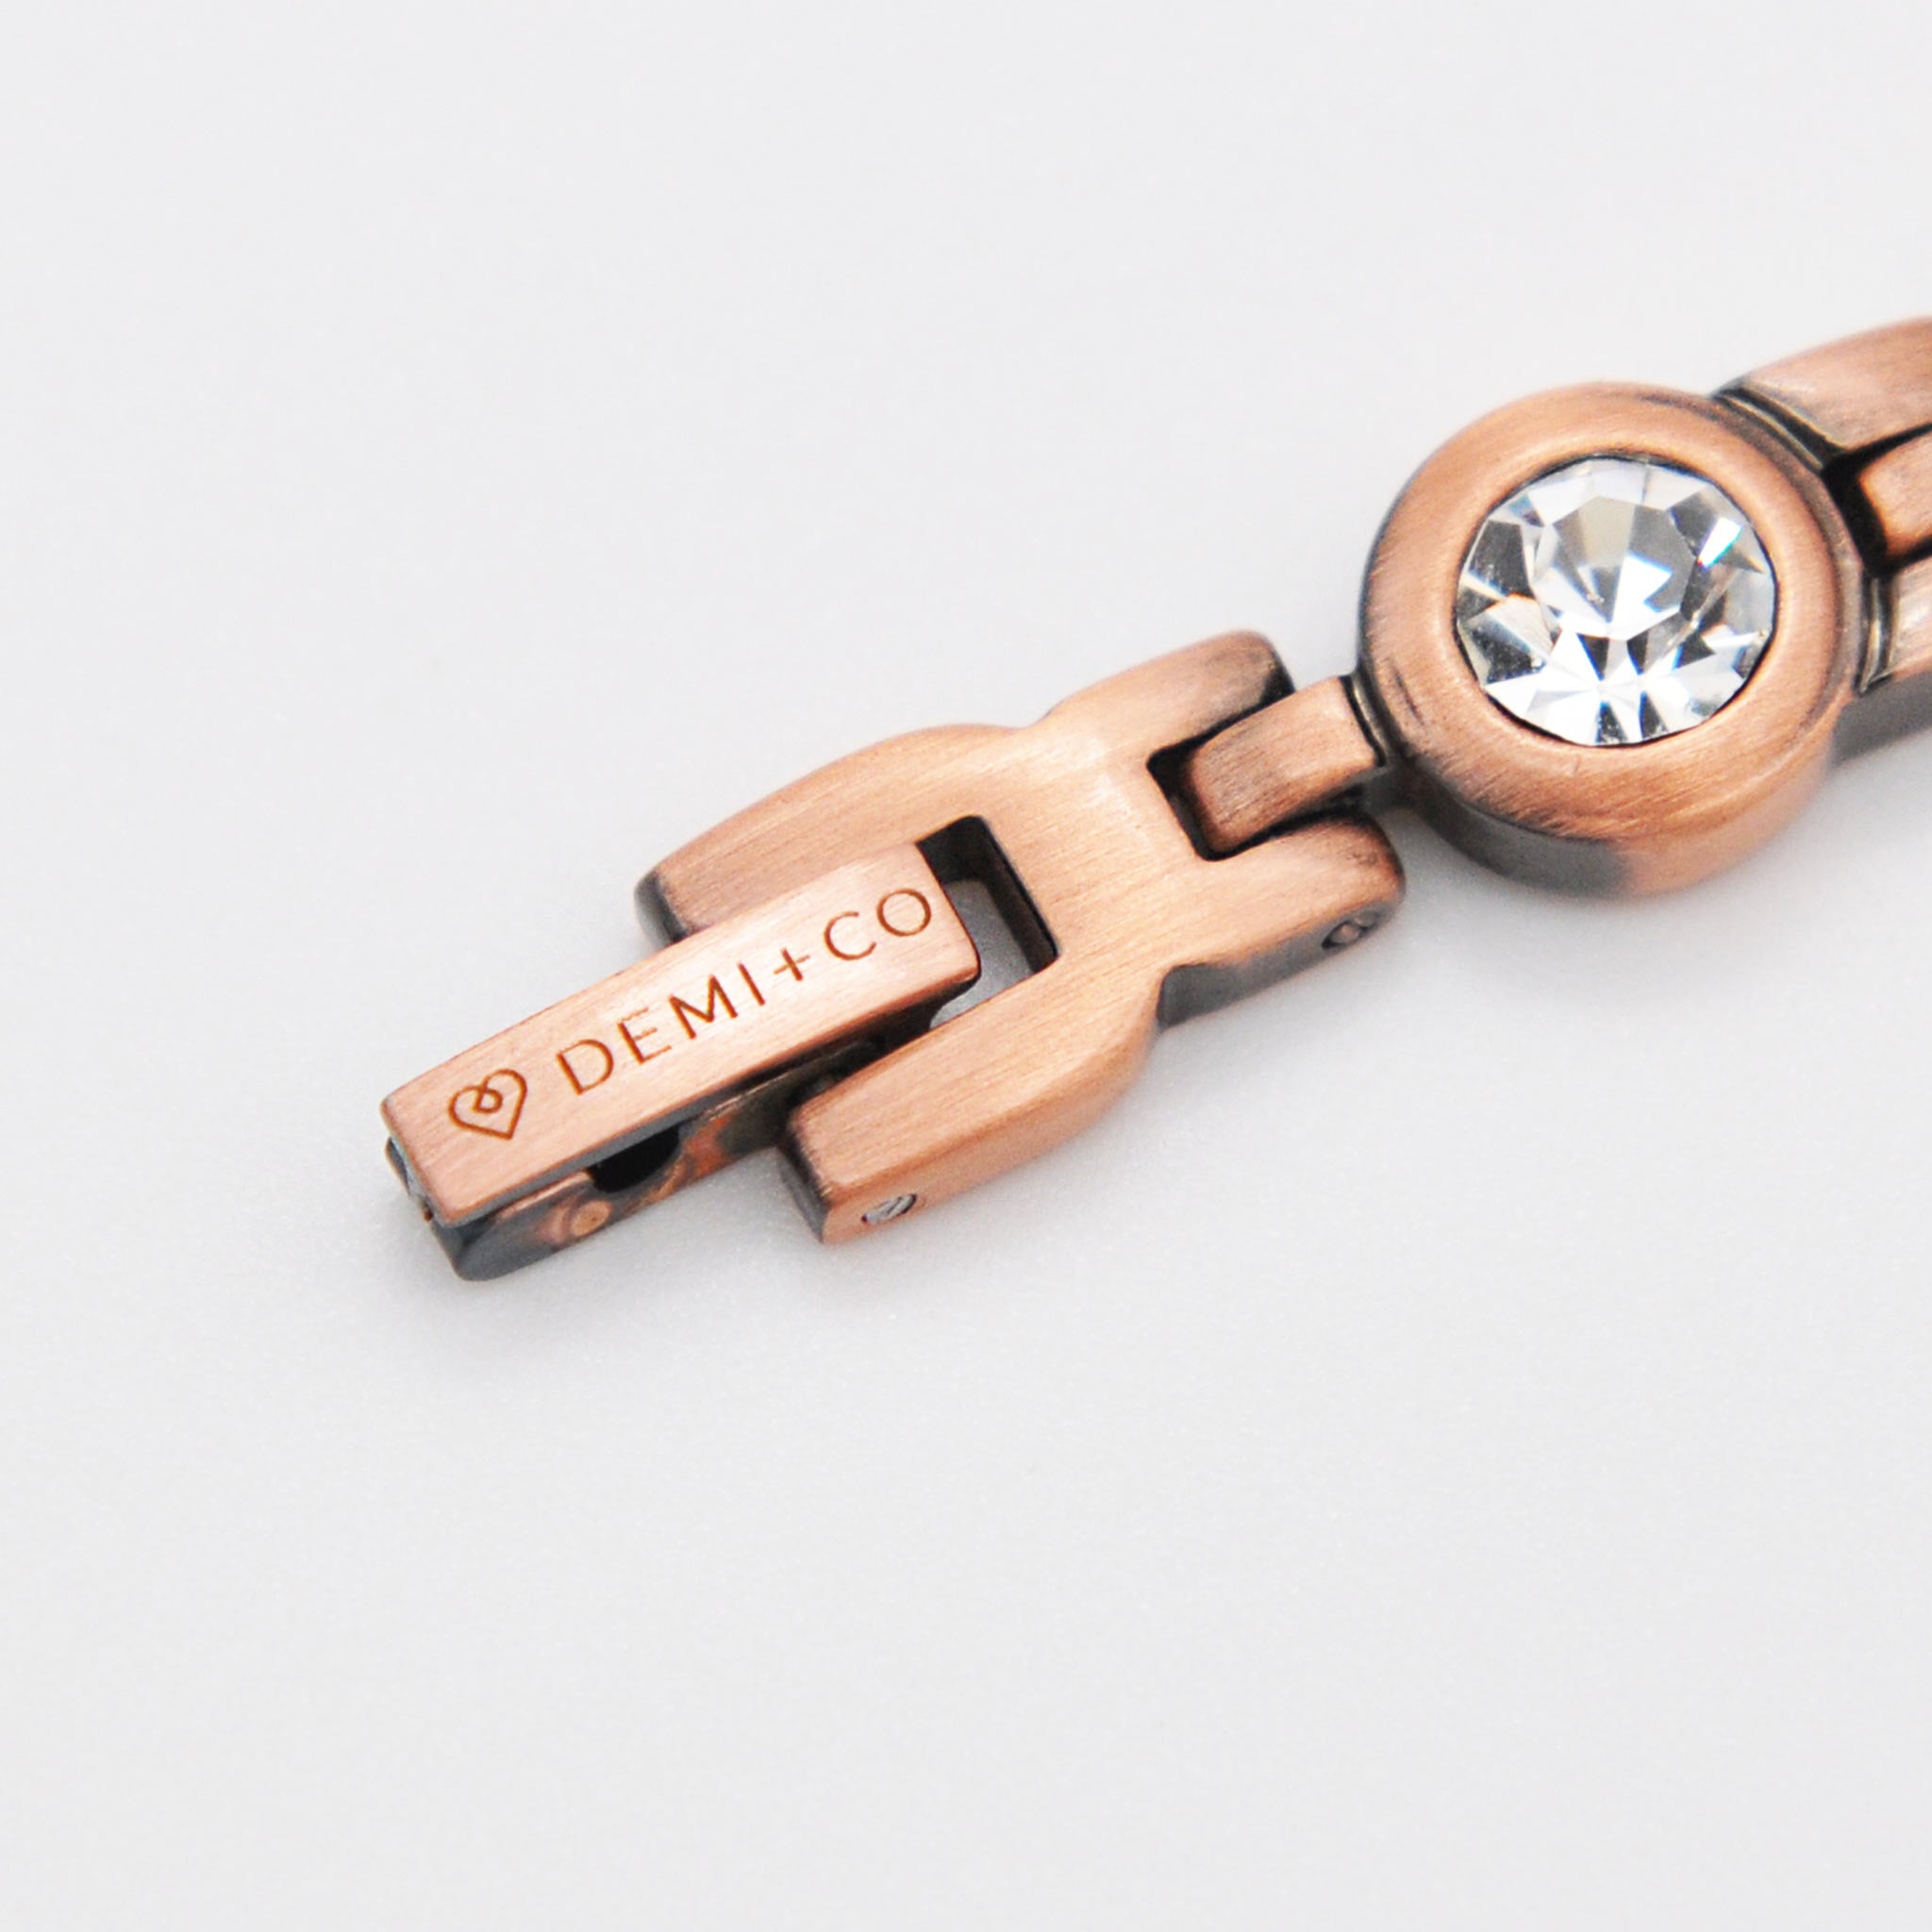 Natalie ladies copper magnetic bracelet